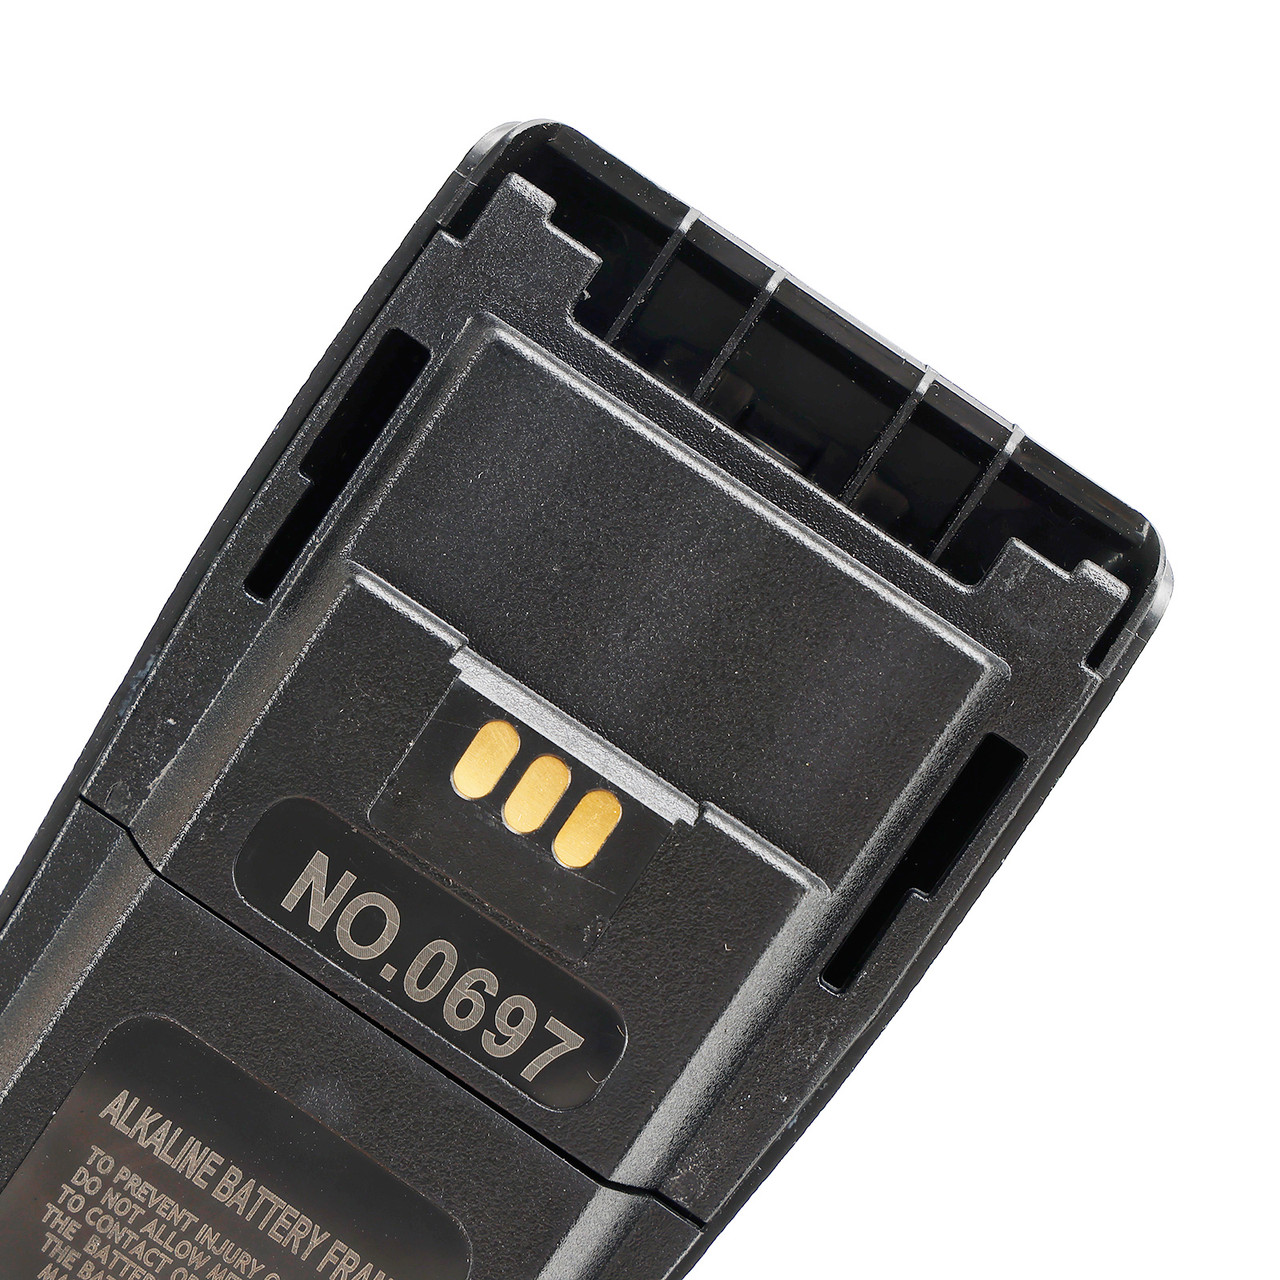 GP3688 Battery Case Box Split Box Bags For GP3188 EP450 CP140 CP180 CP040 CP200